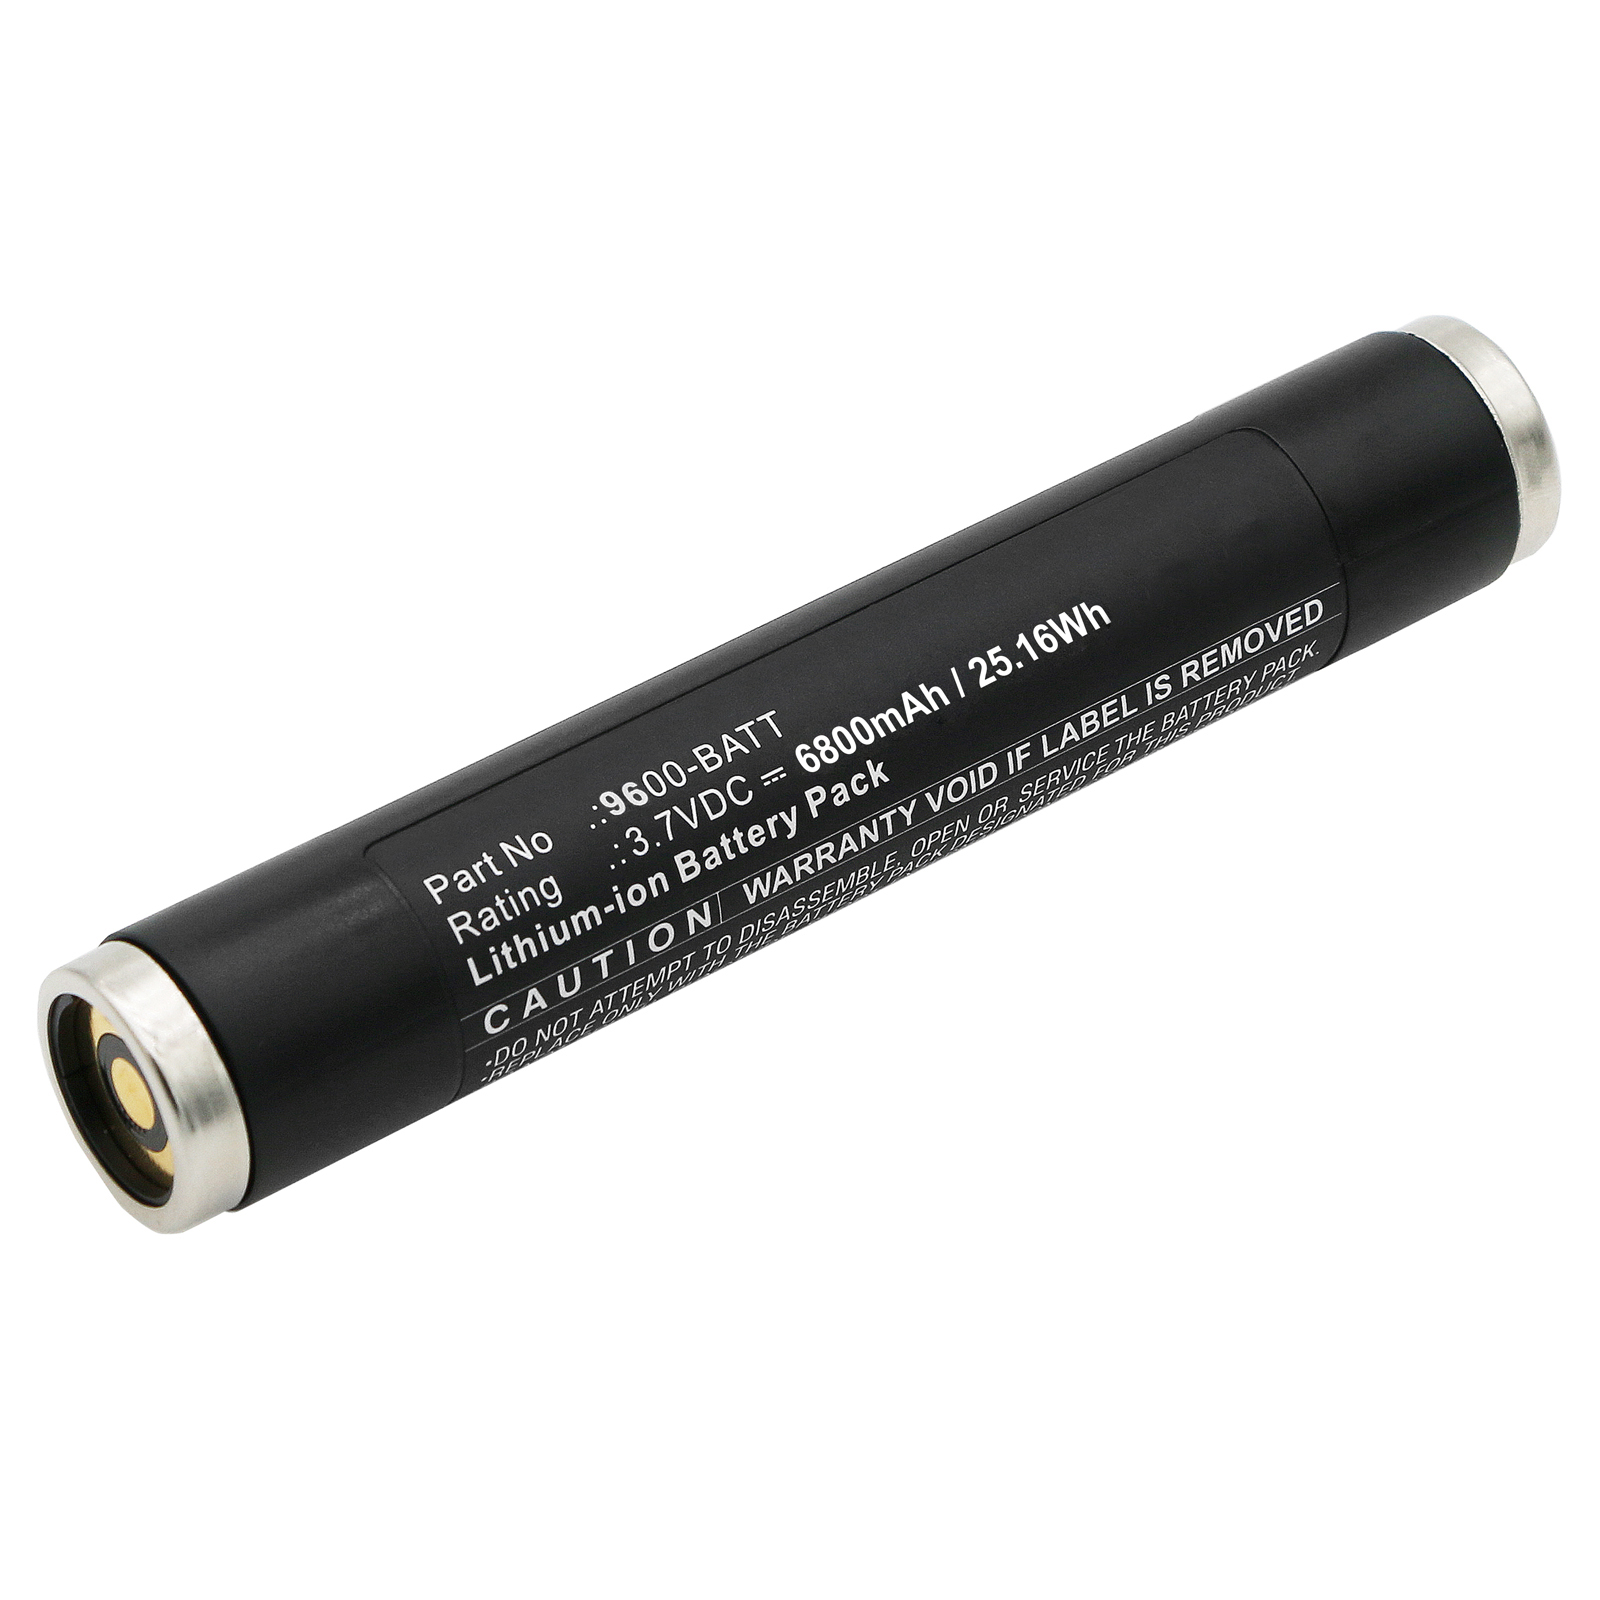 Synergy Digital Flashlight Battery, Compatible with Nightstick 9600-BATT Flashlight Battery (Li-Ion, 3.7V, 6800mAh)